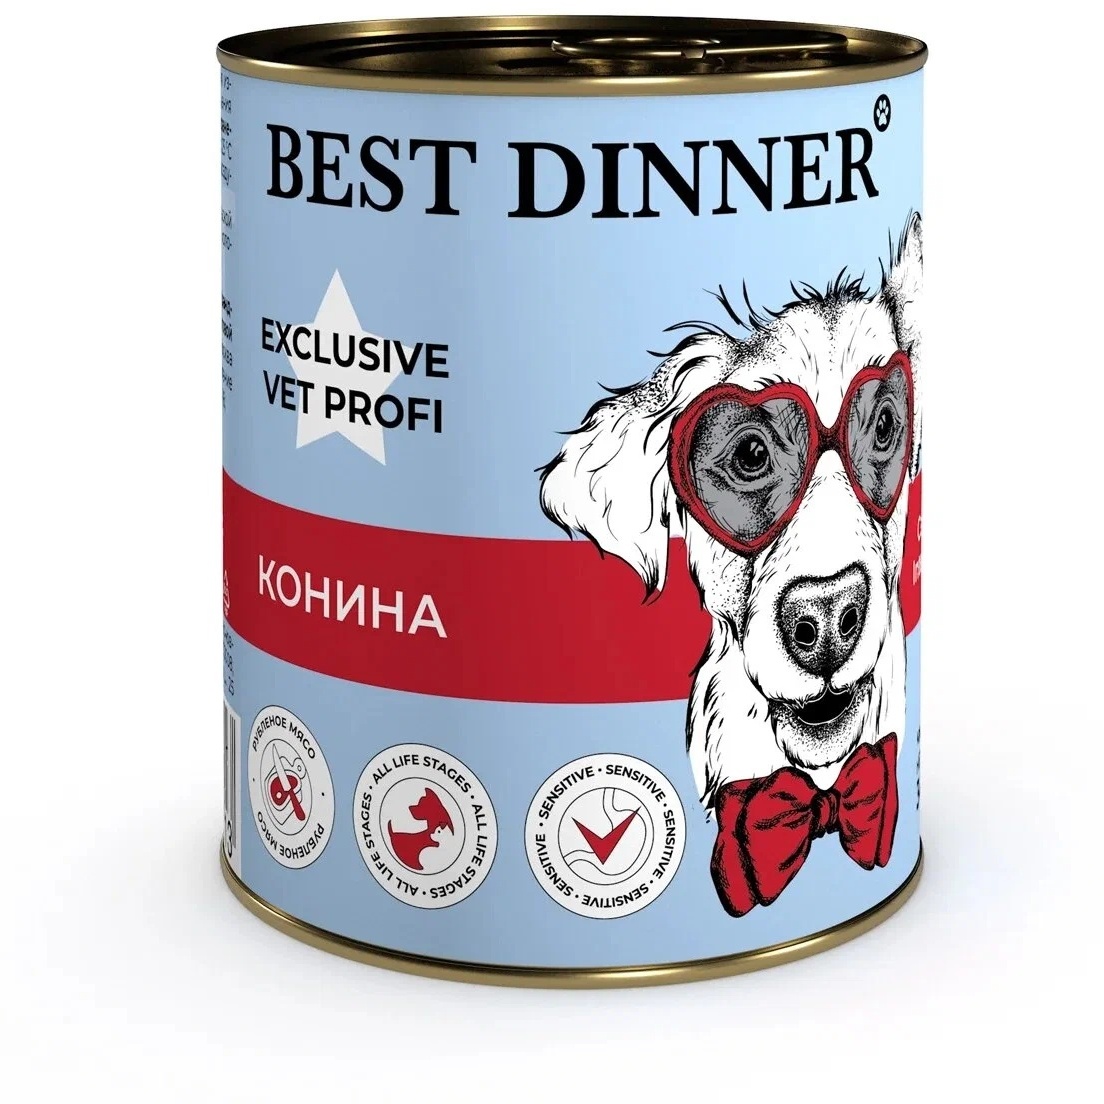 Best Dinner Exclusive Vet Profi Gastro Intestinal Конина конс для собак 340 г 1